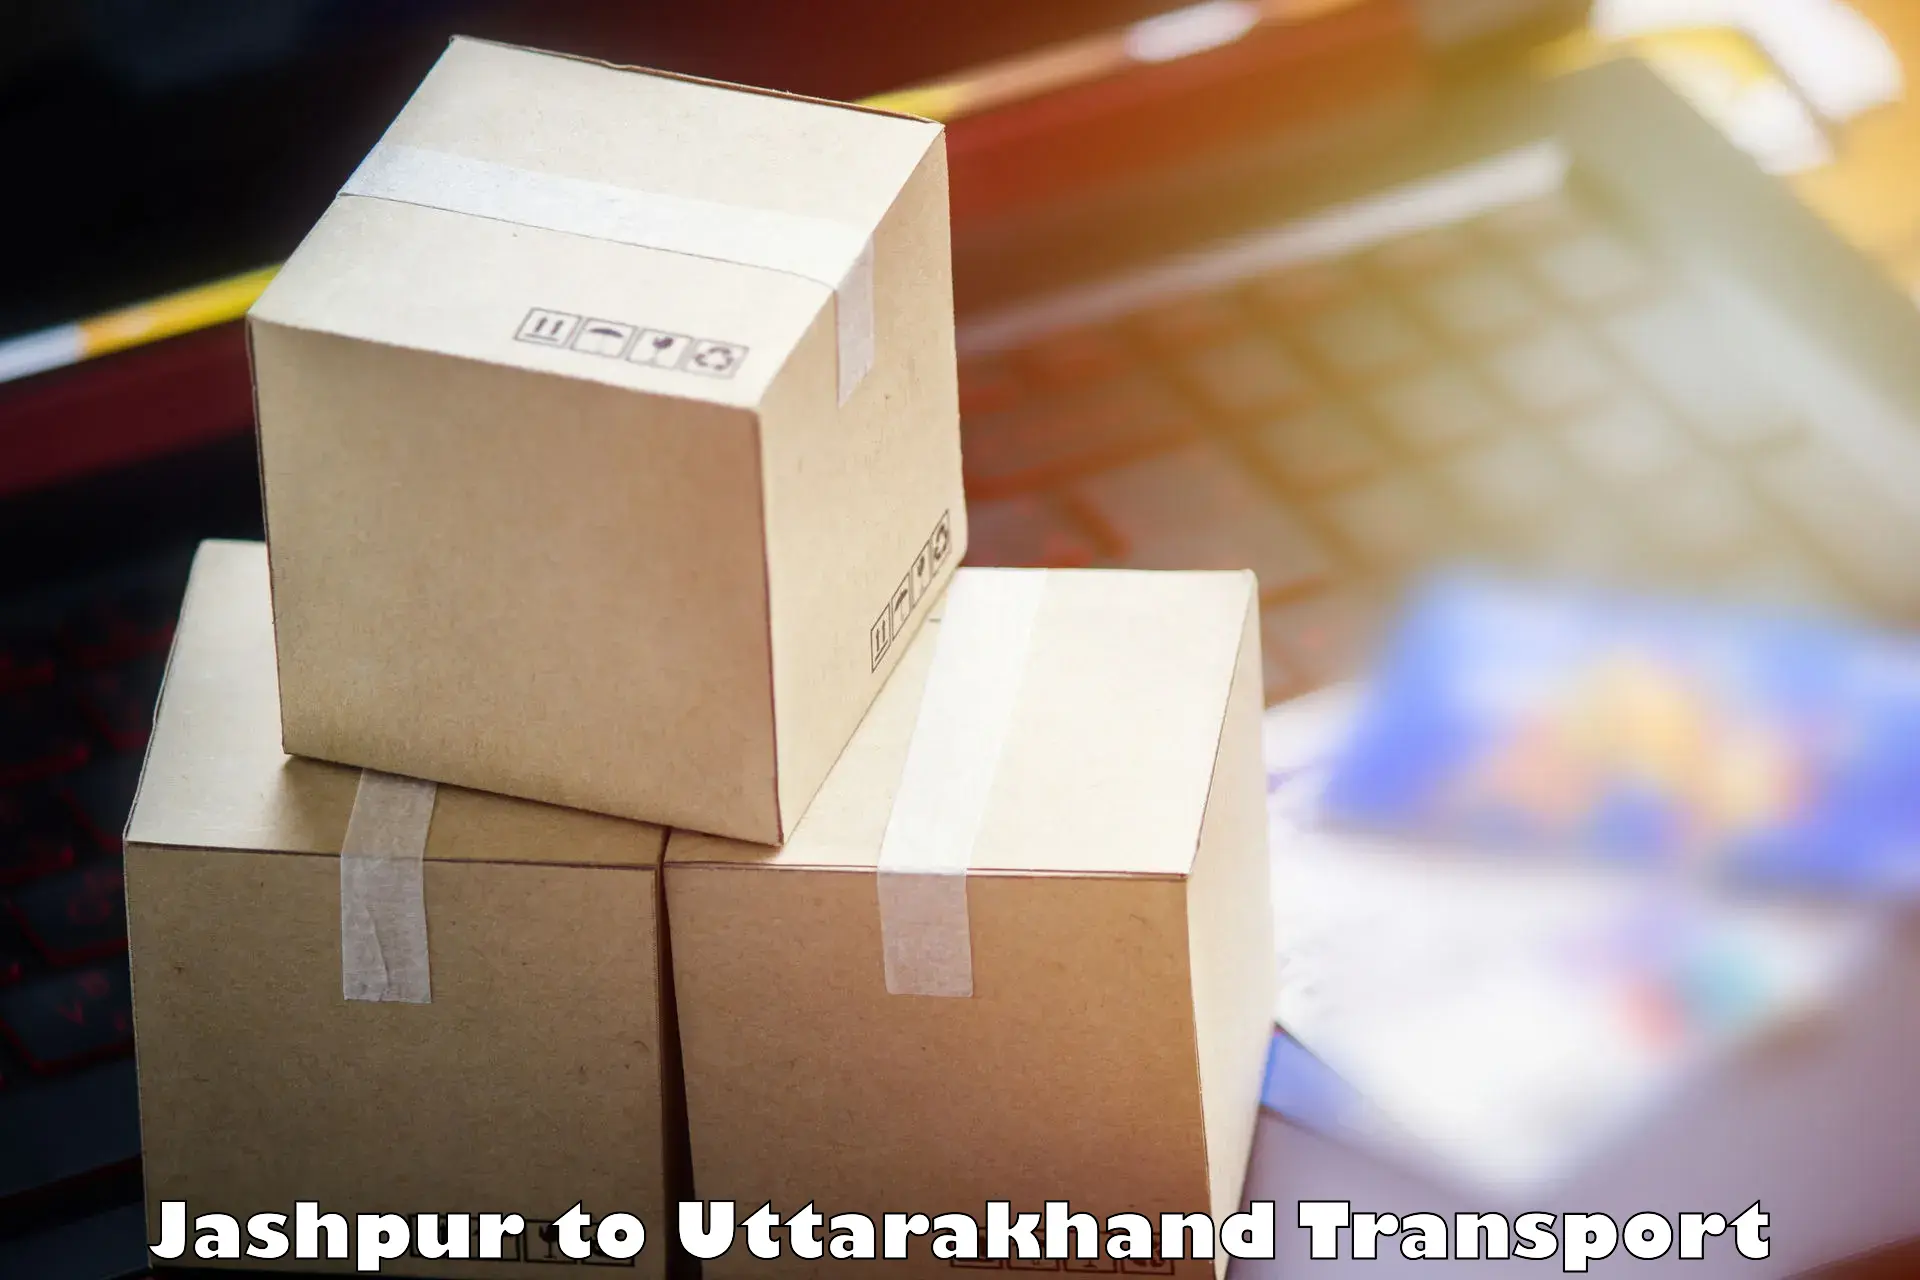 Delivery service Jashpur to Uttarakhand